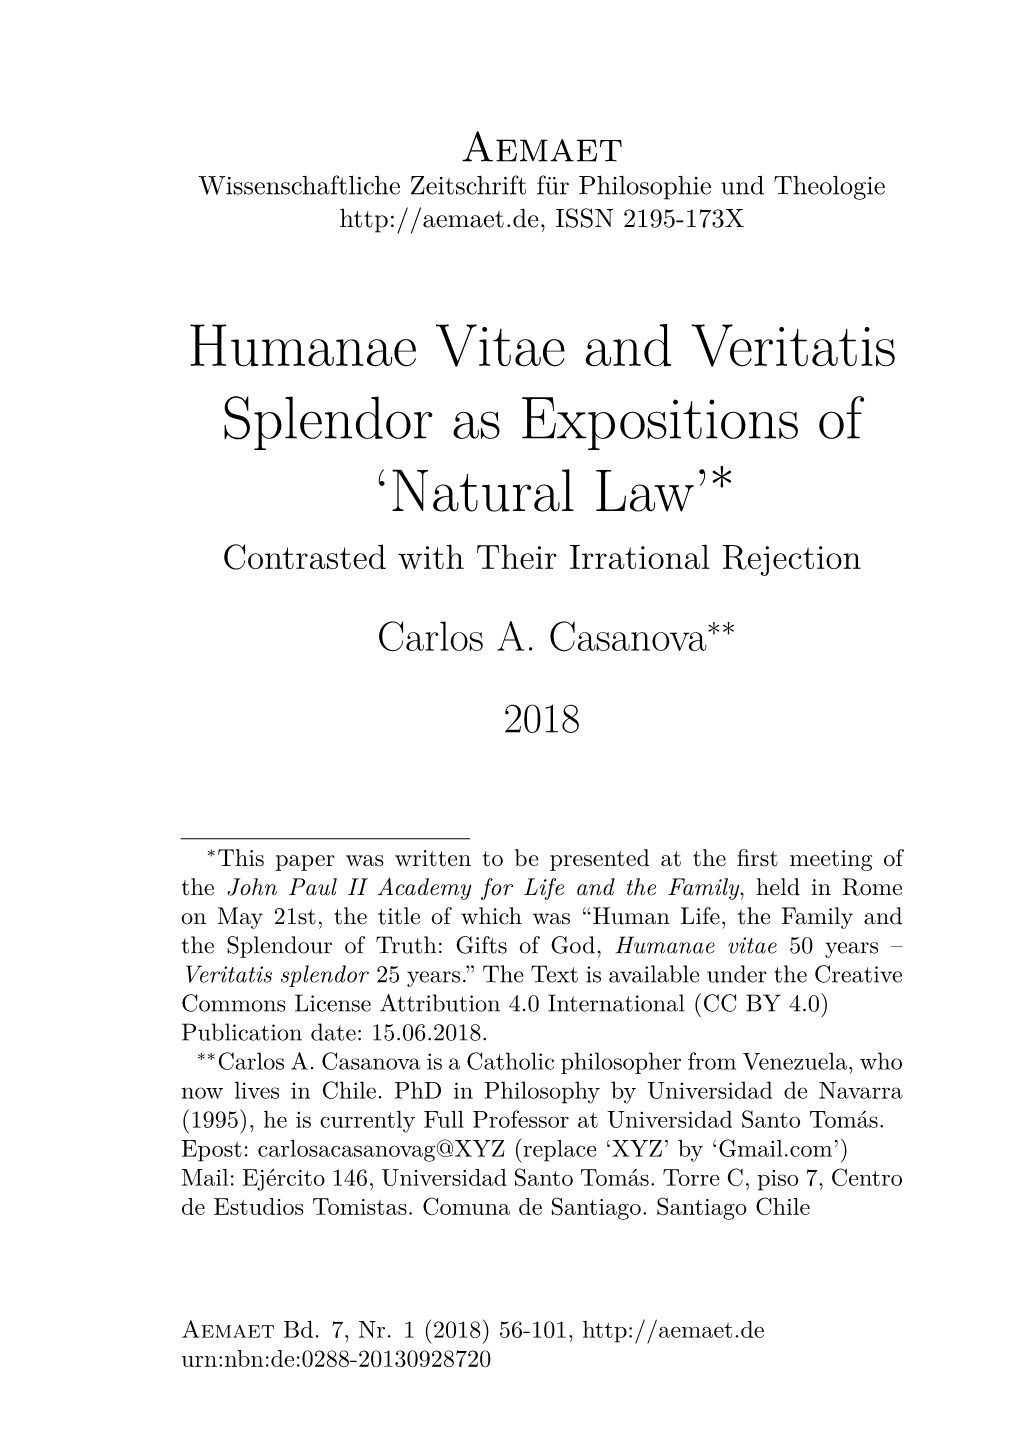 Humanae Vitae and Veritatis Splendor As Expositions of 'Natural Law'